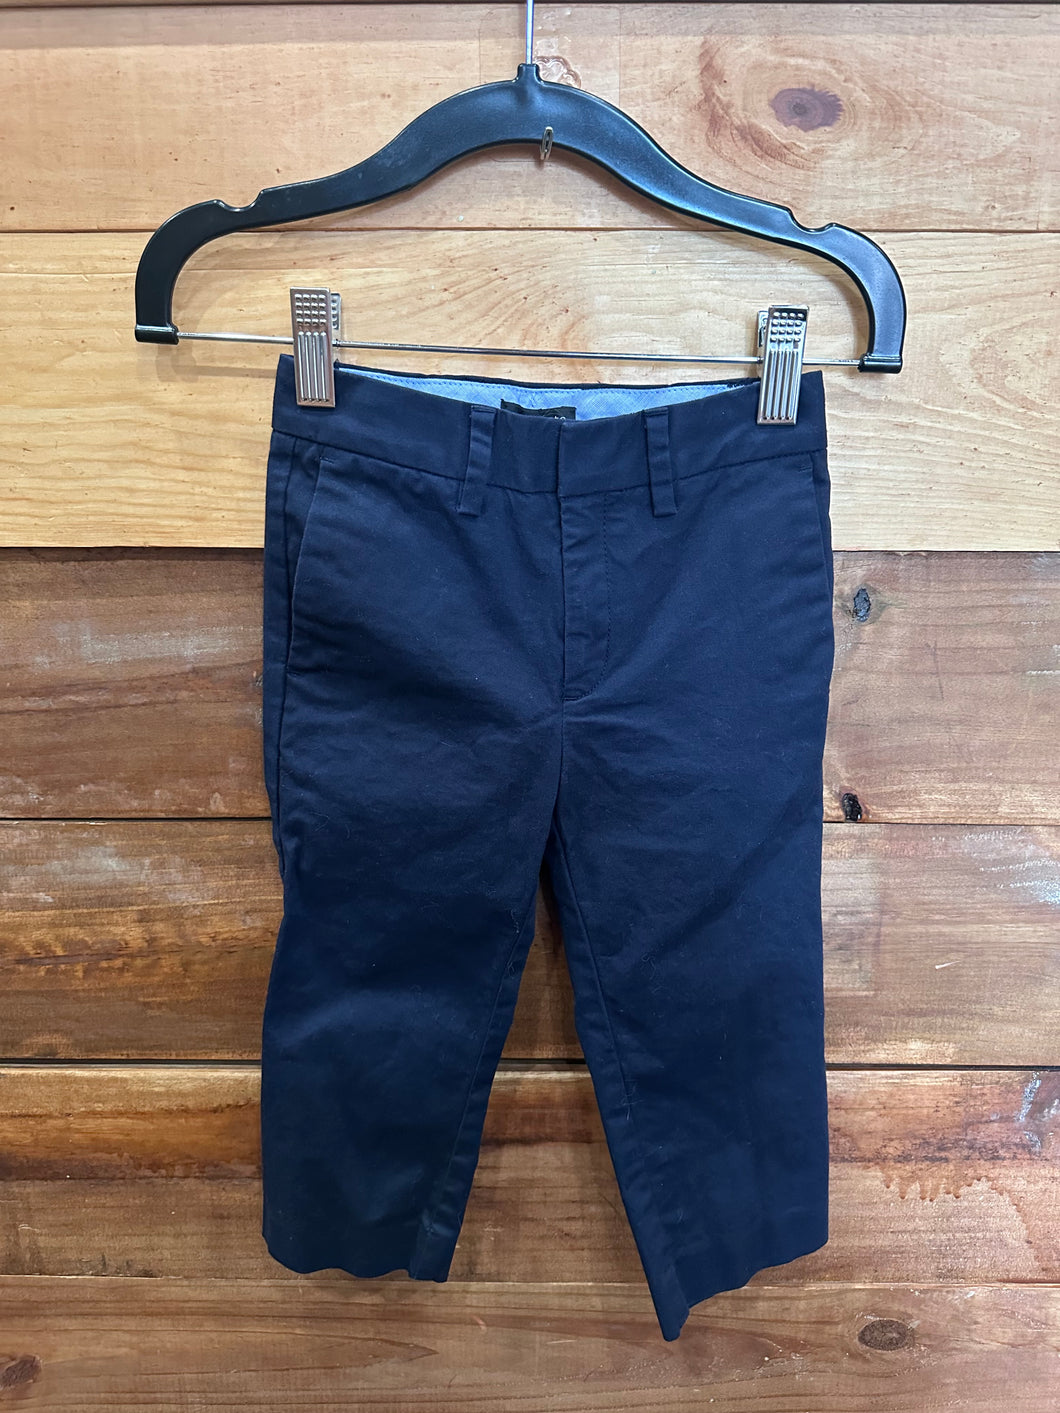 Crewcuts Blue Pants Size 2